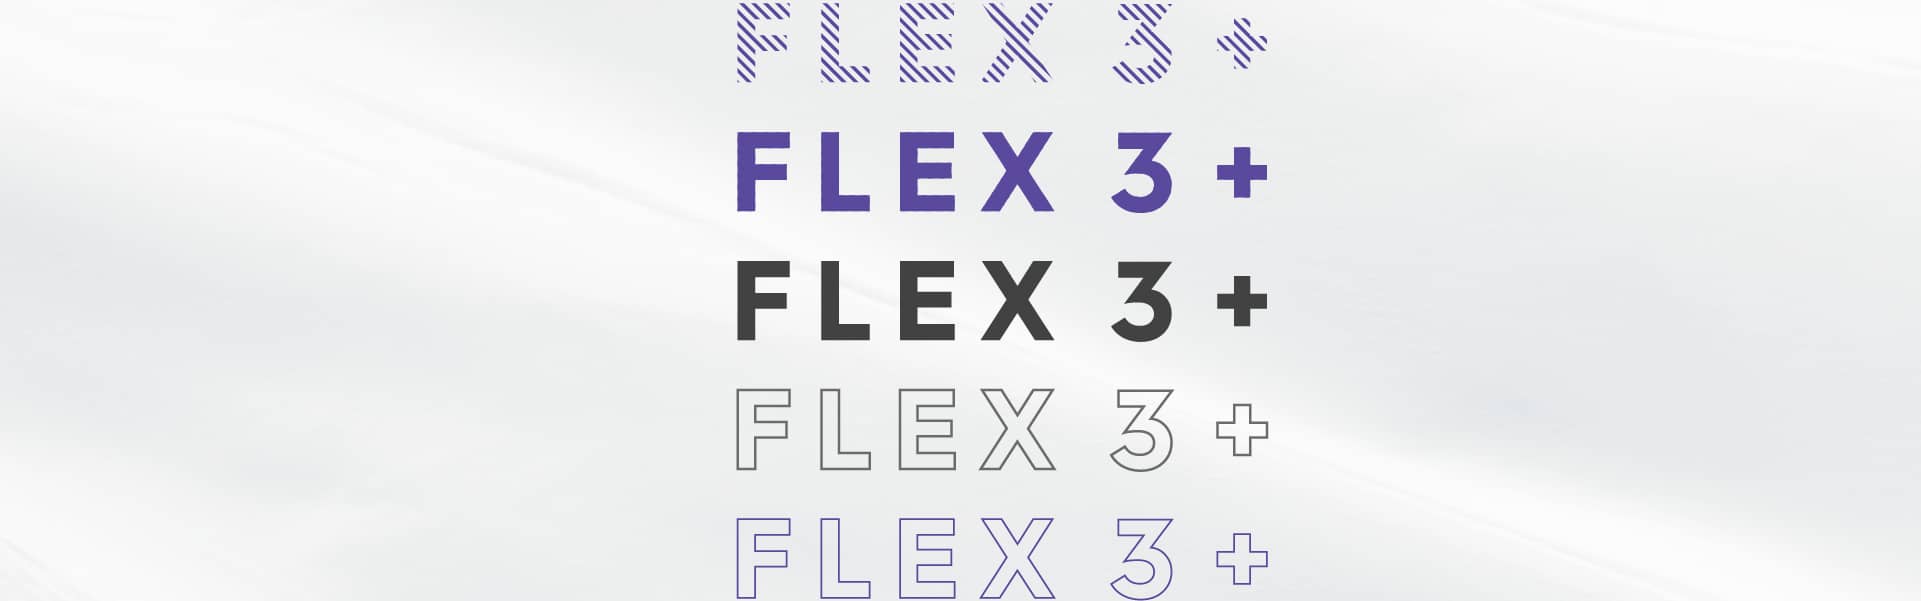 Flex 3 + Pass Image